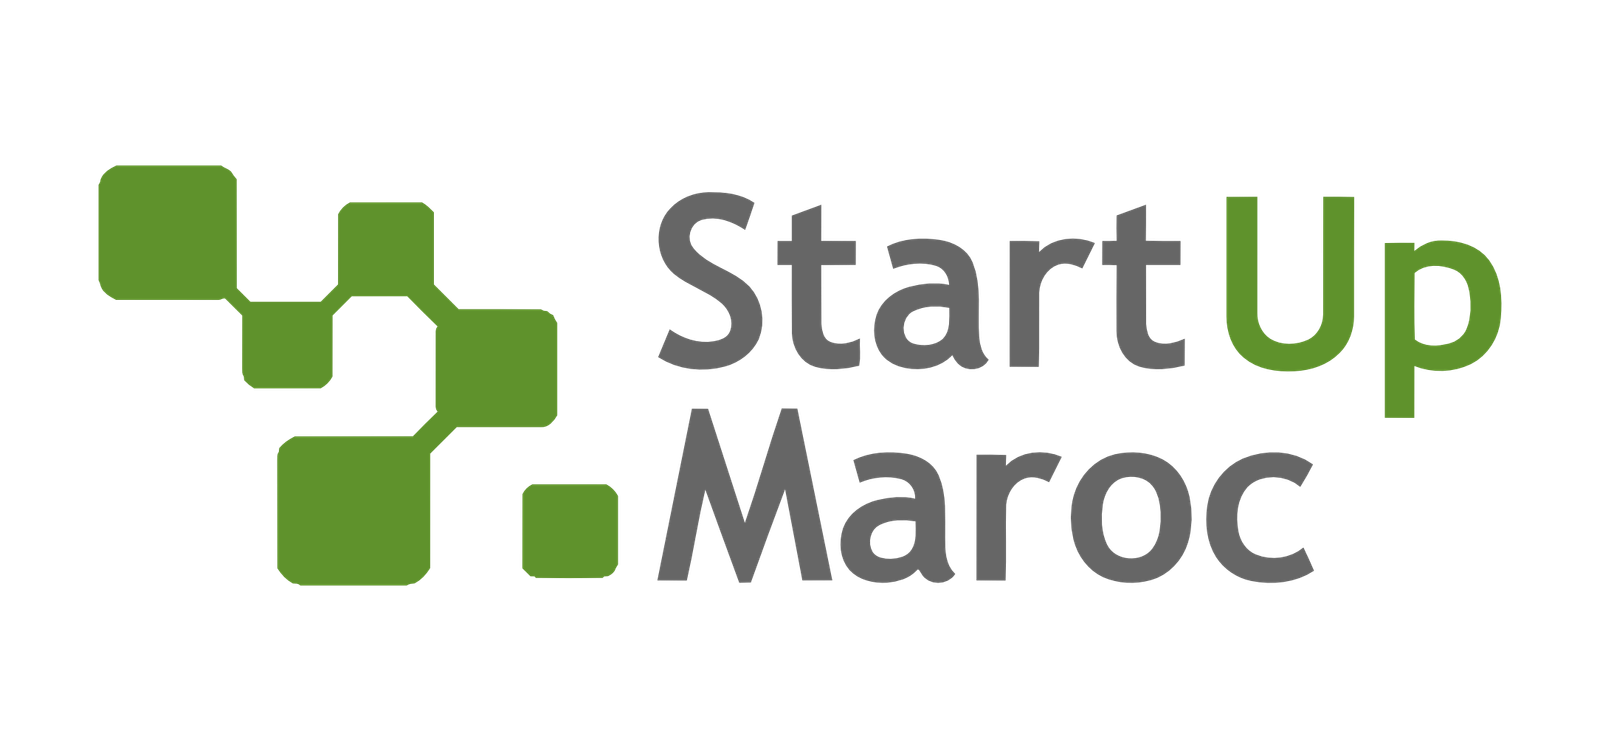 StartUp Maroc 2030